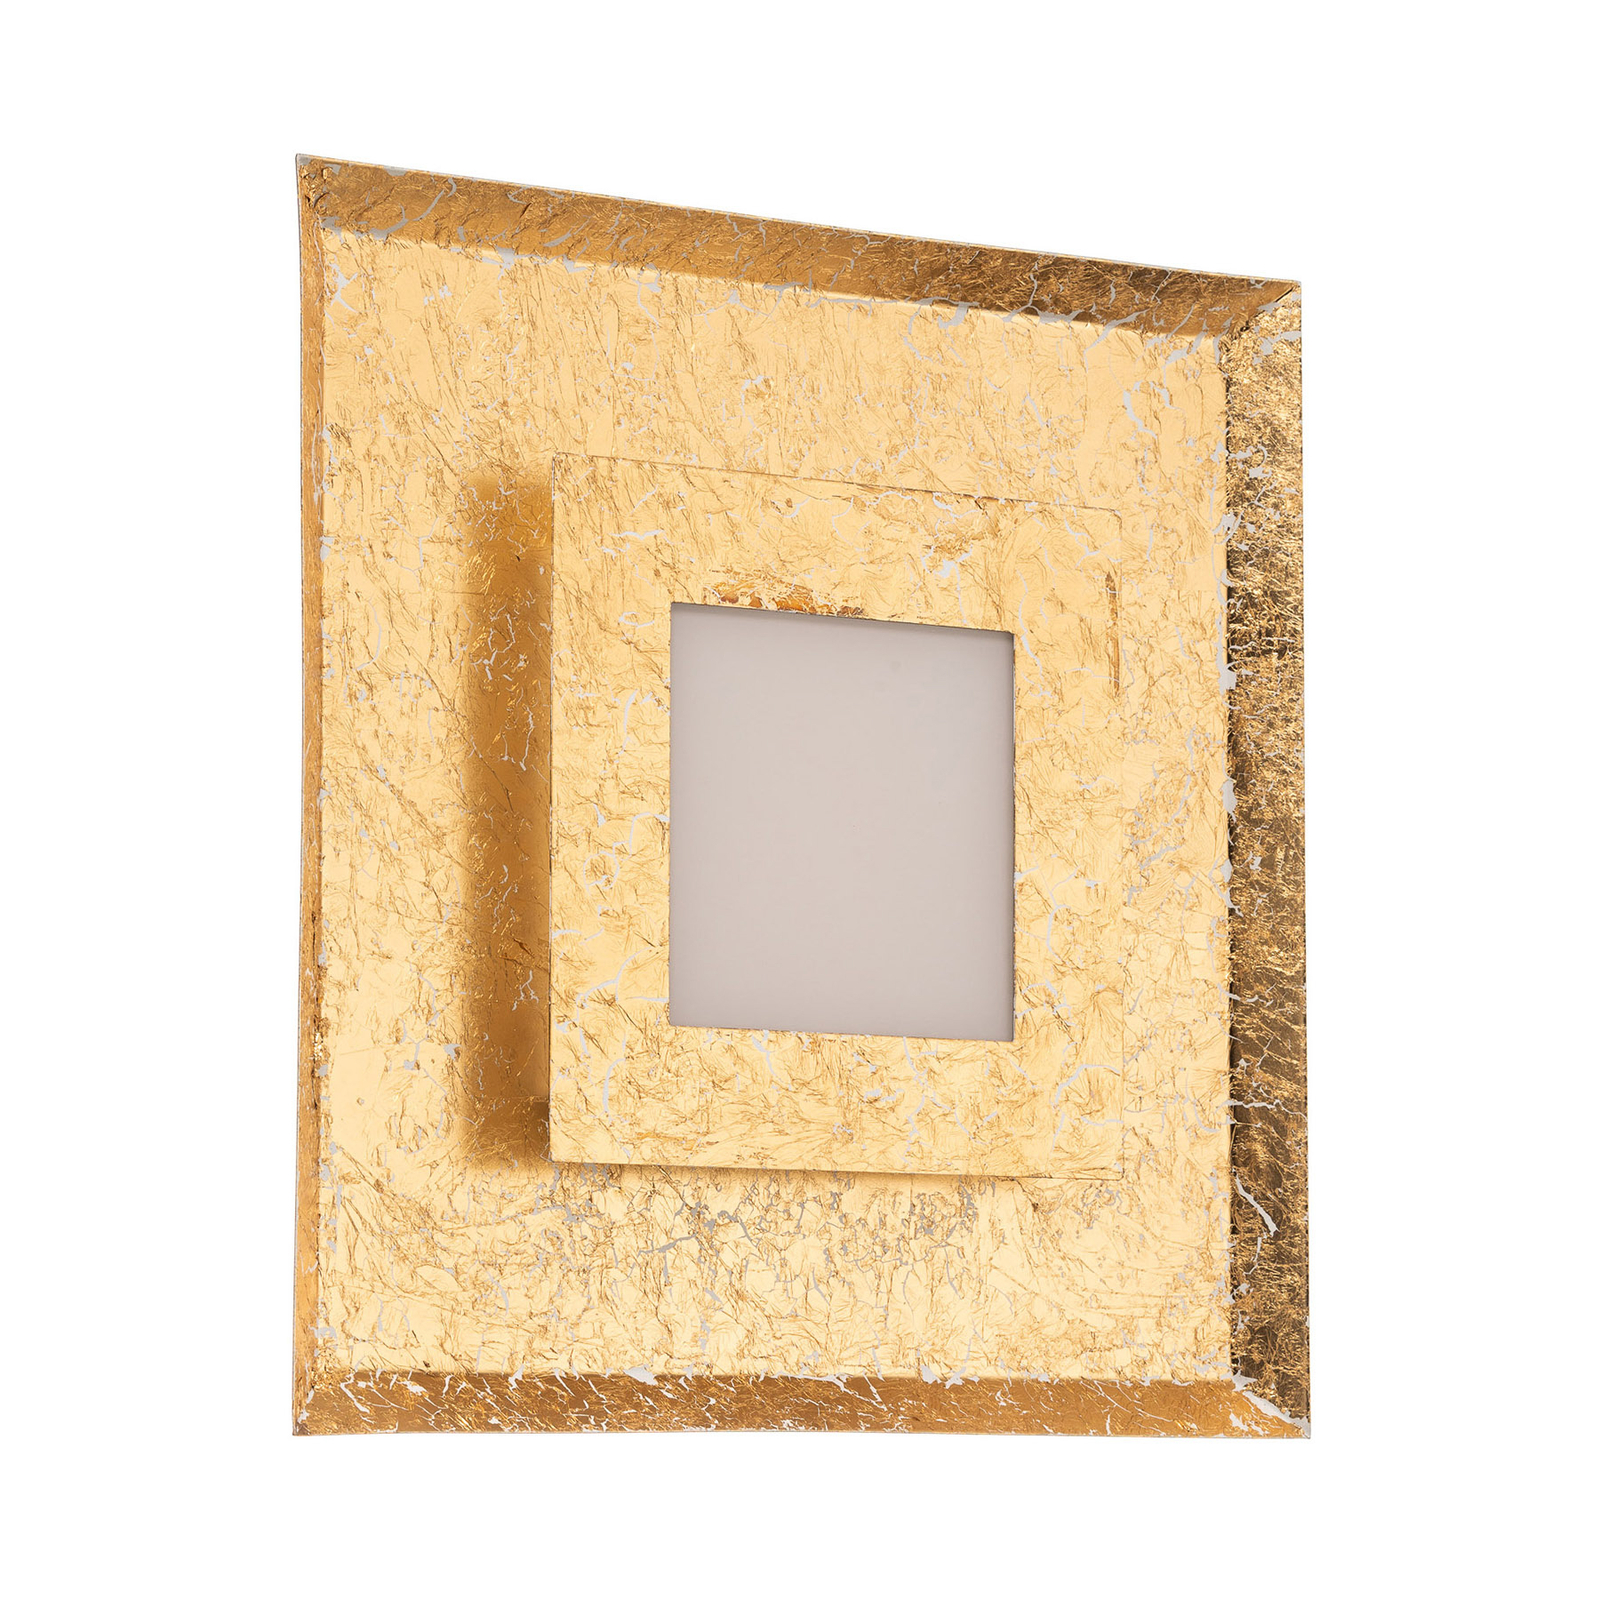 LED-vägglampa Window, 39 x 39 cm, guld